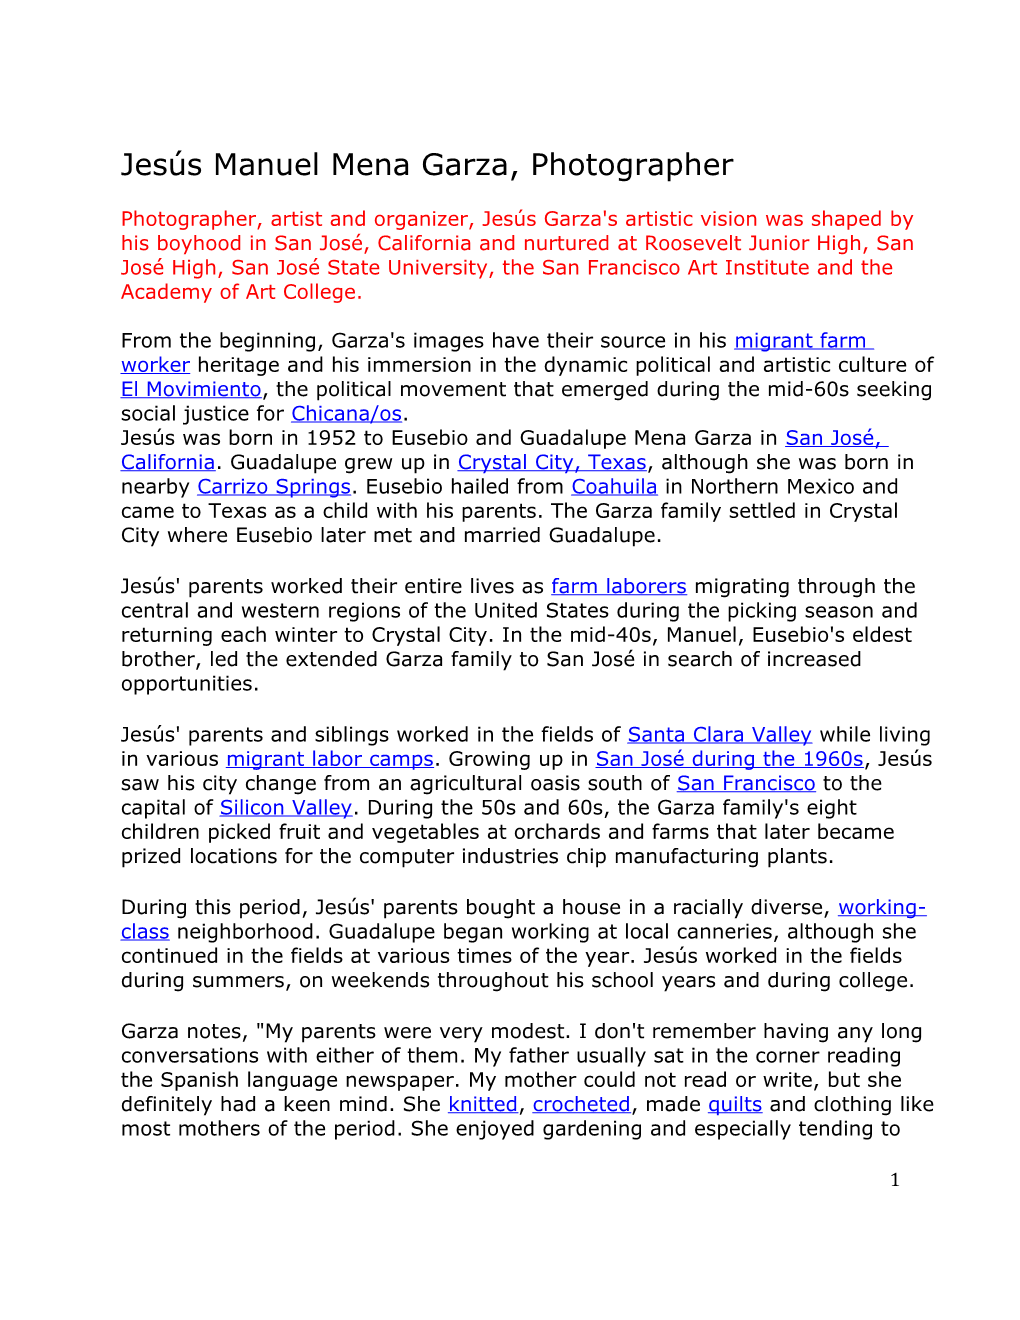 Jesús Manuel Mena Garza, Photographer Photographer, Artist and Organizer, Jesús Garza's